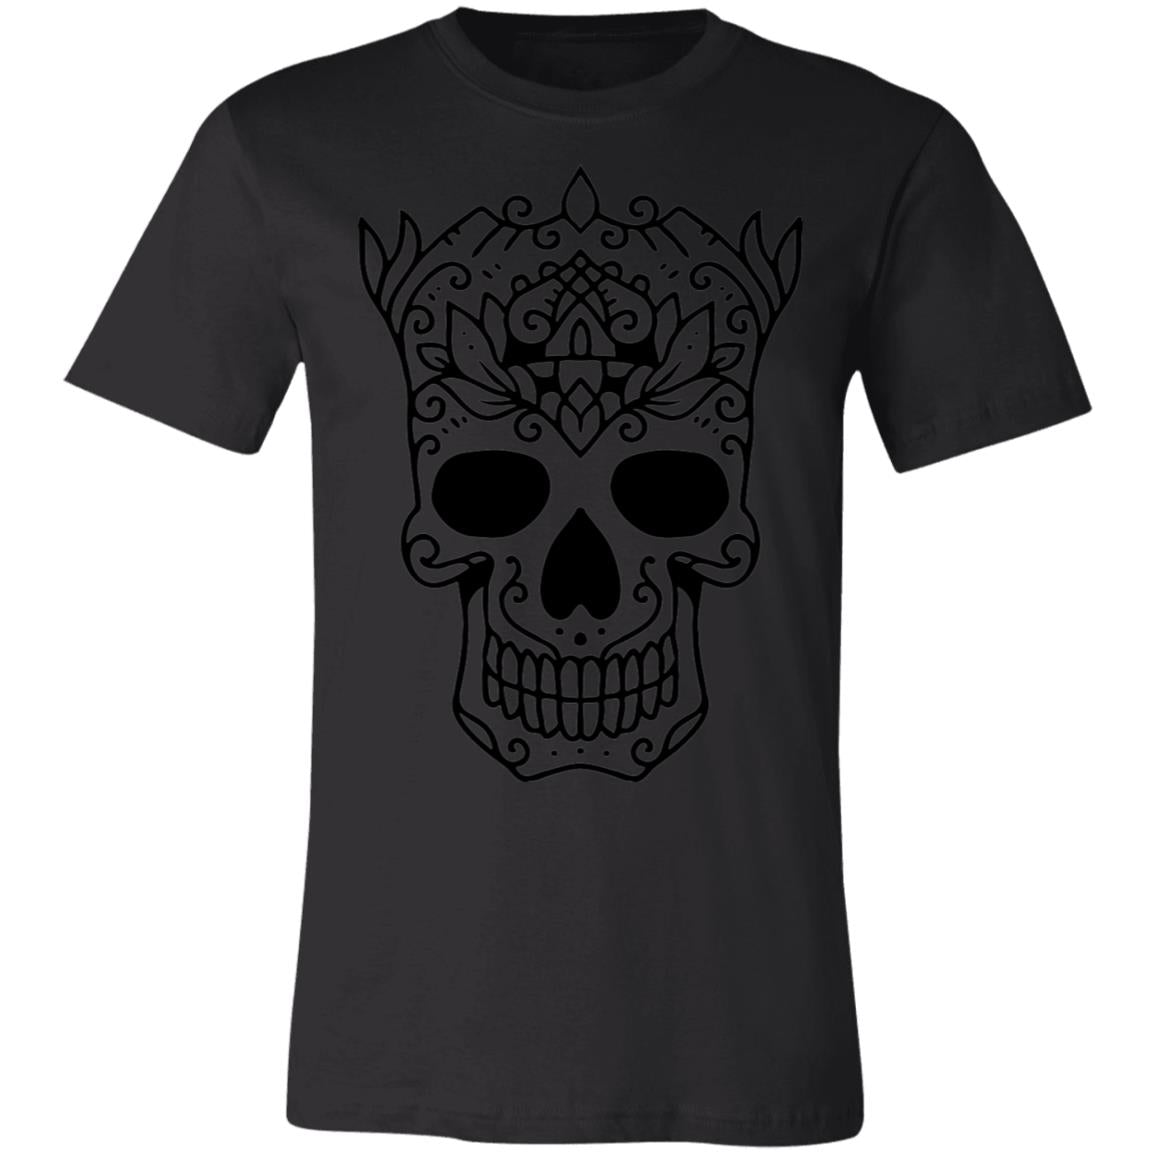 Skull 99 Santa Muerte Shirt-Express Your Love Gifts